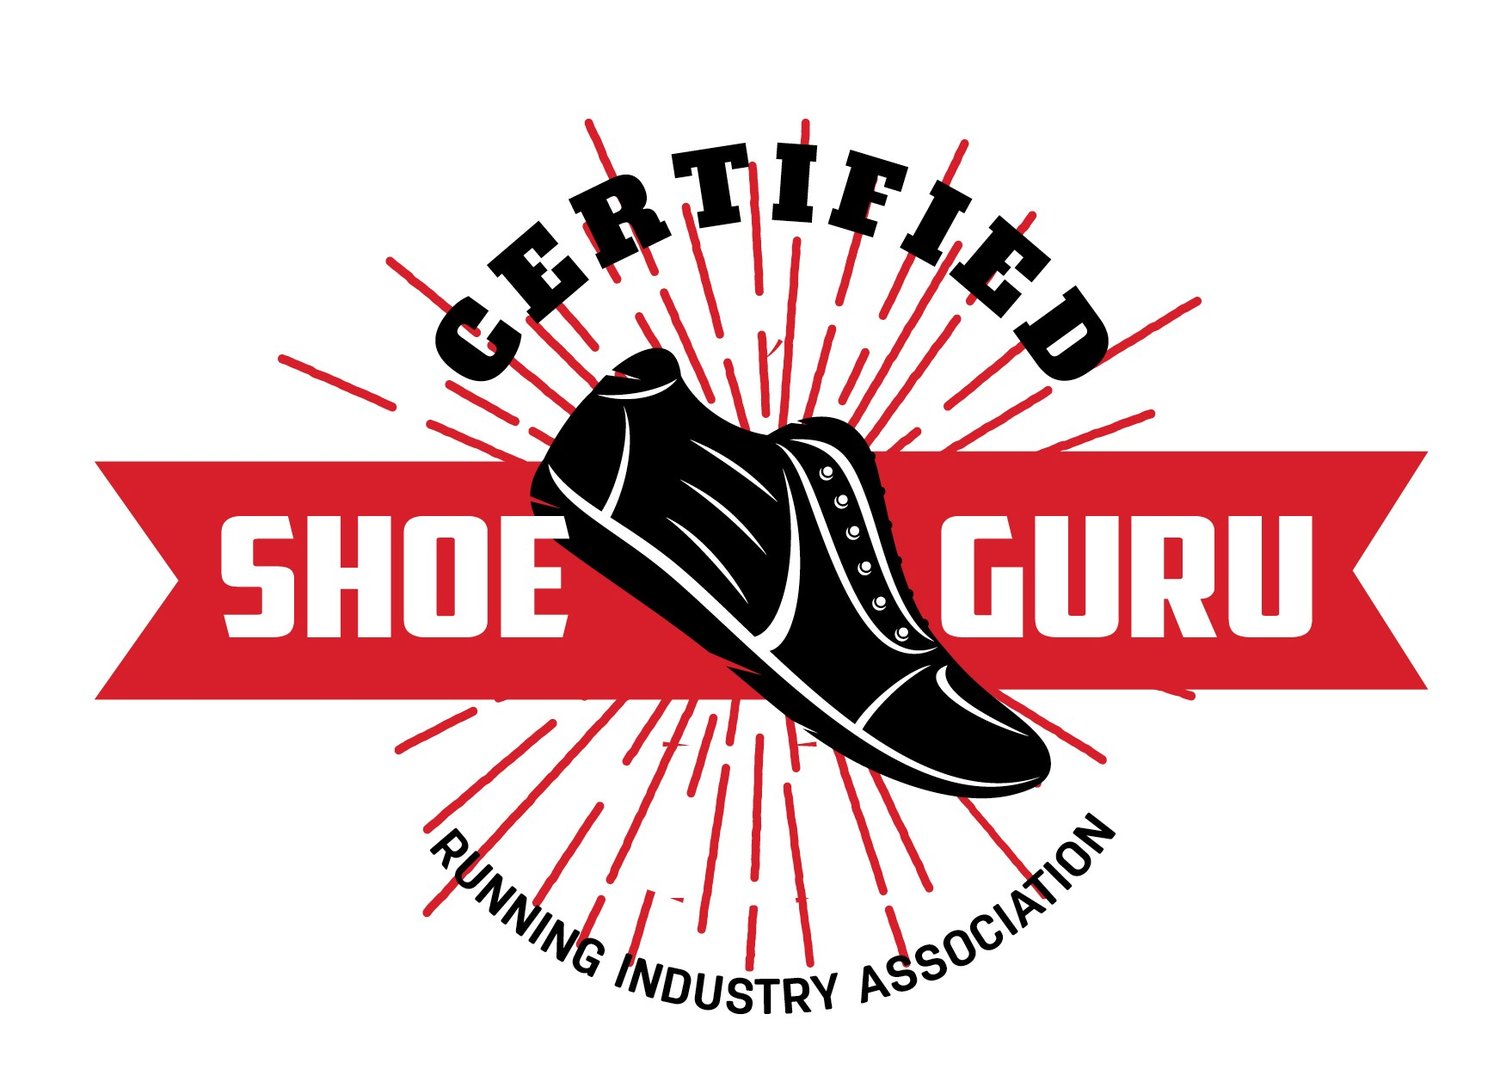 3 run shop. Обувь Guru. Running shop. The best Shoe logos in the World.